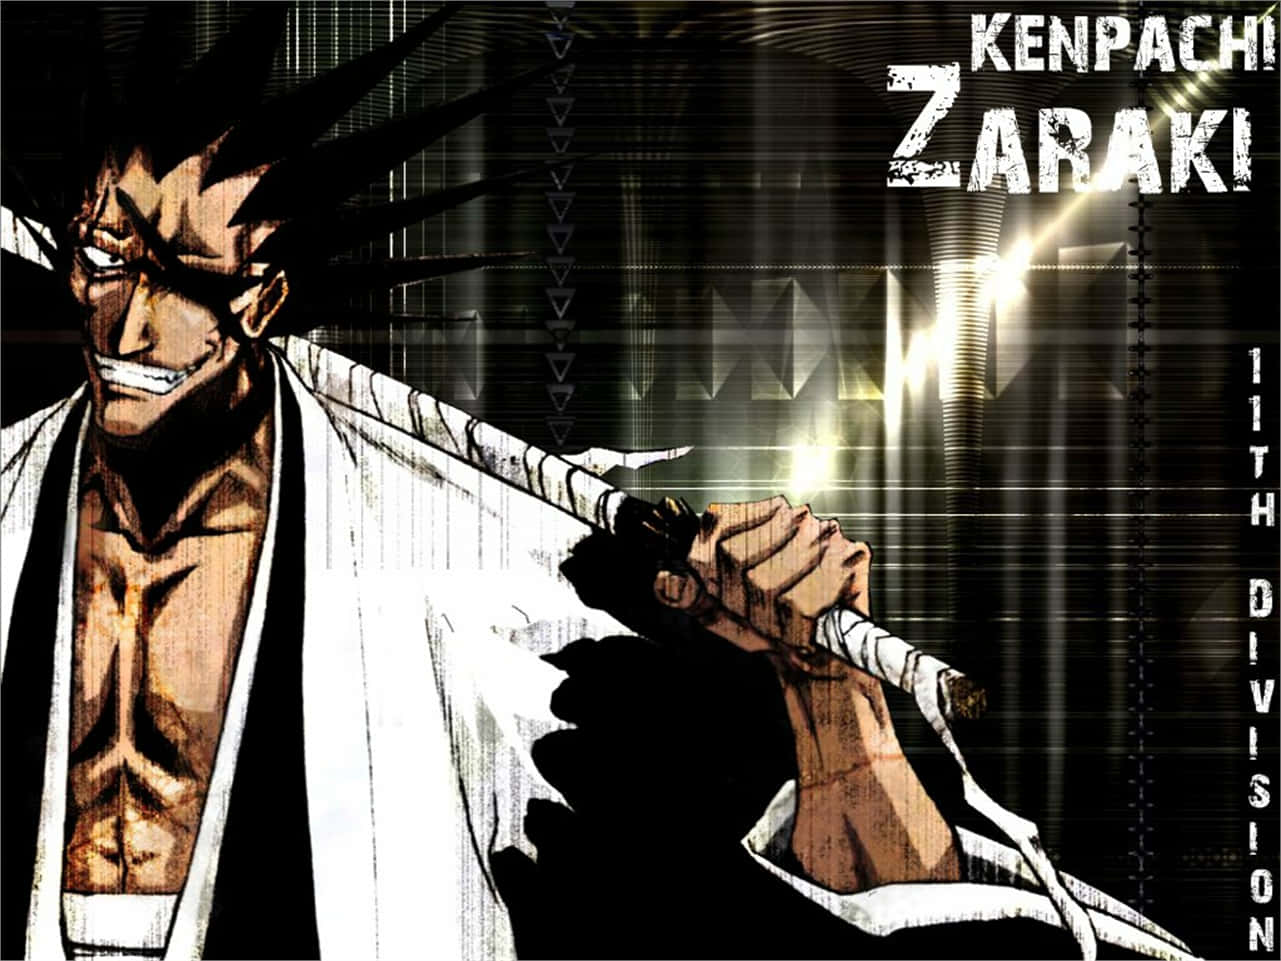 Formidable Kenpachi Zaraki - Strength Personified Wallpaper